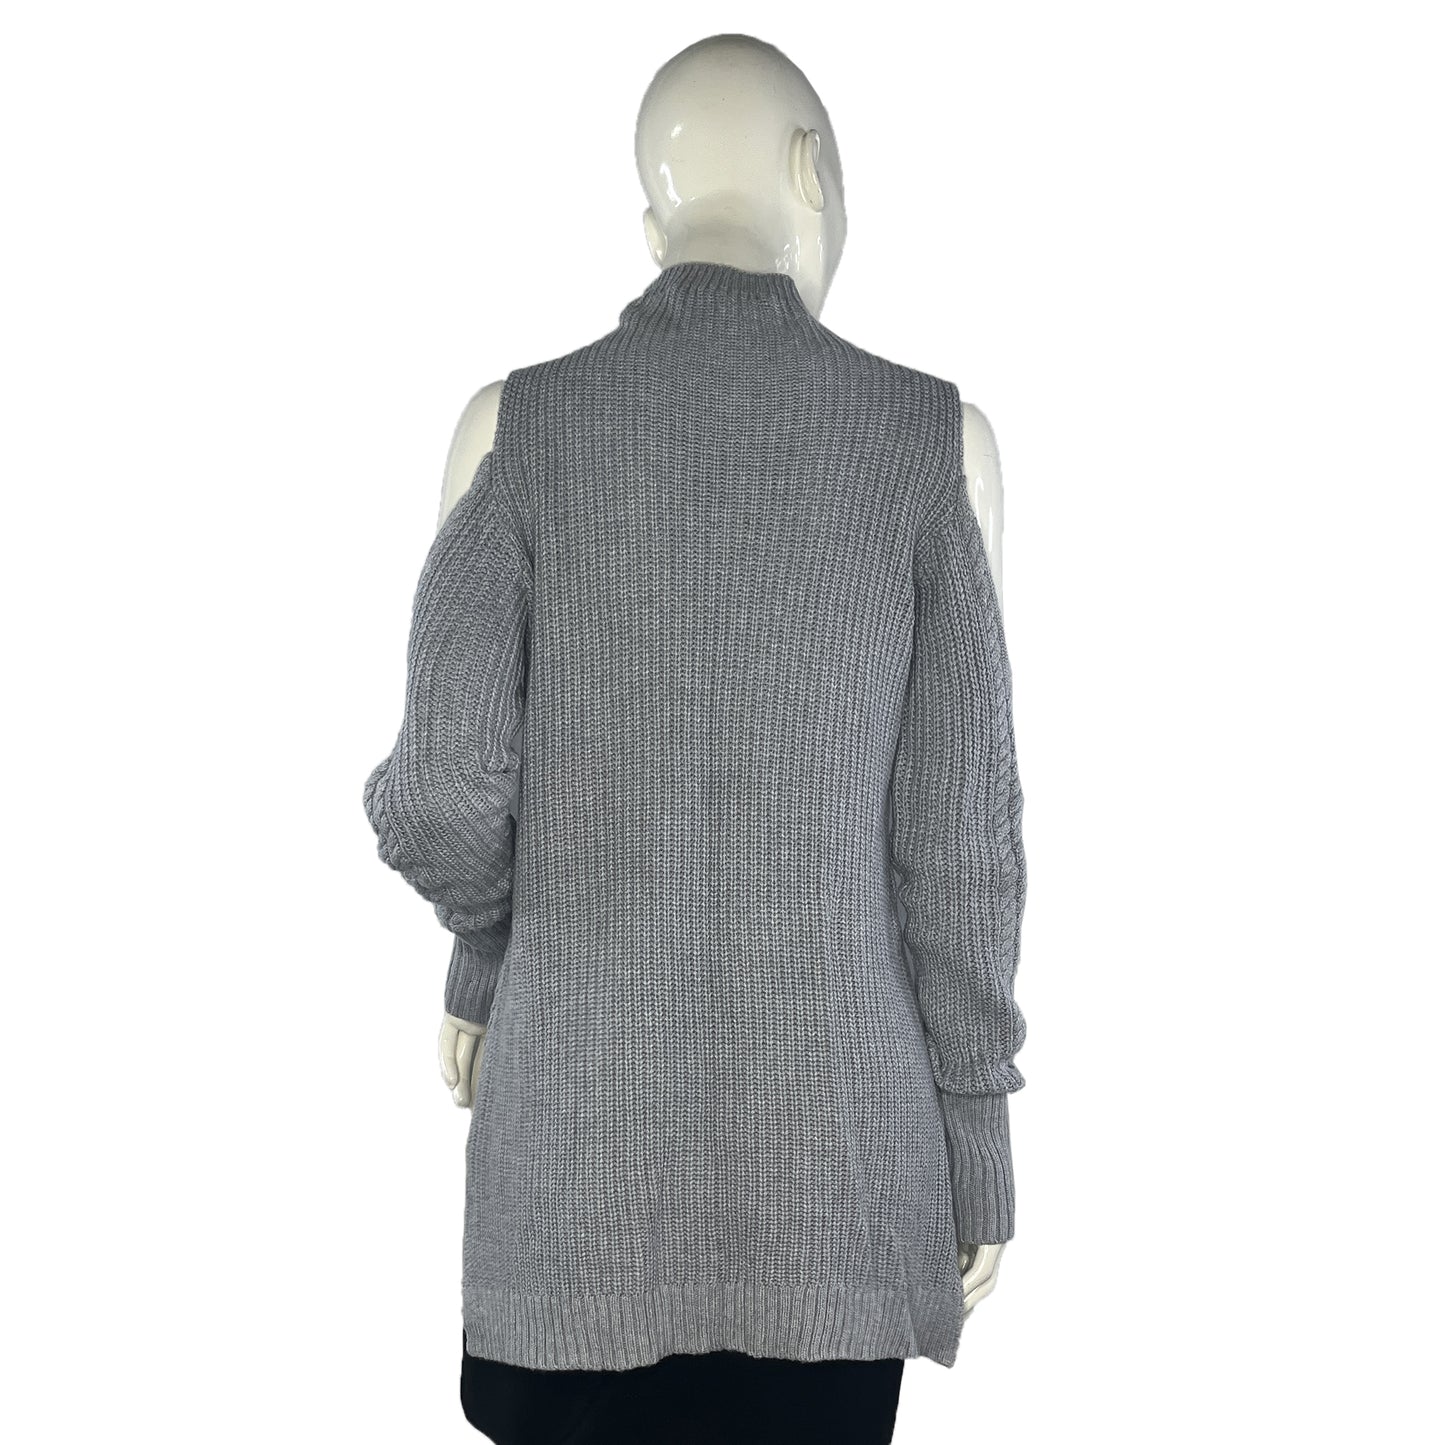 Michael Kors Sweater Open Shoulder Gray Size M SKU 000418